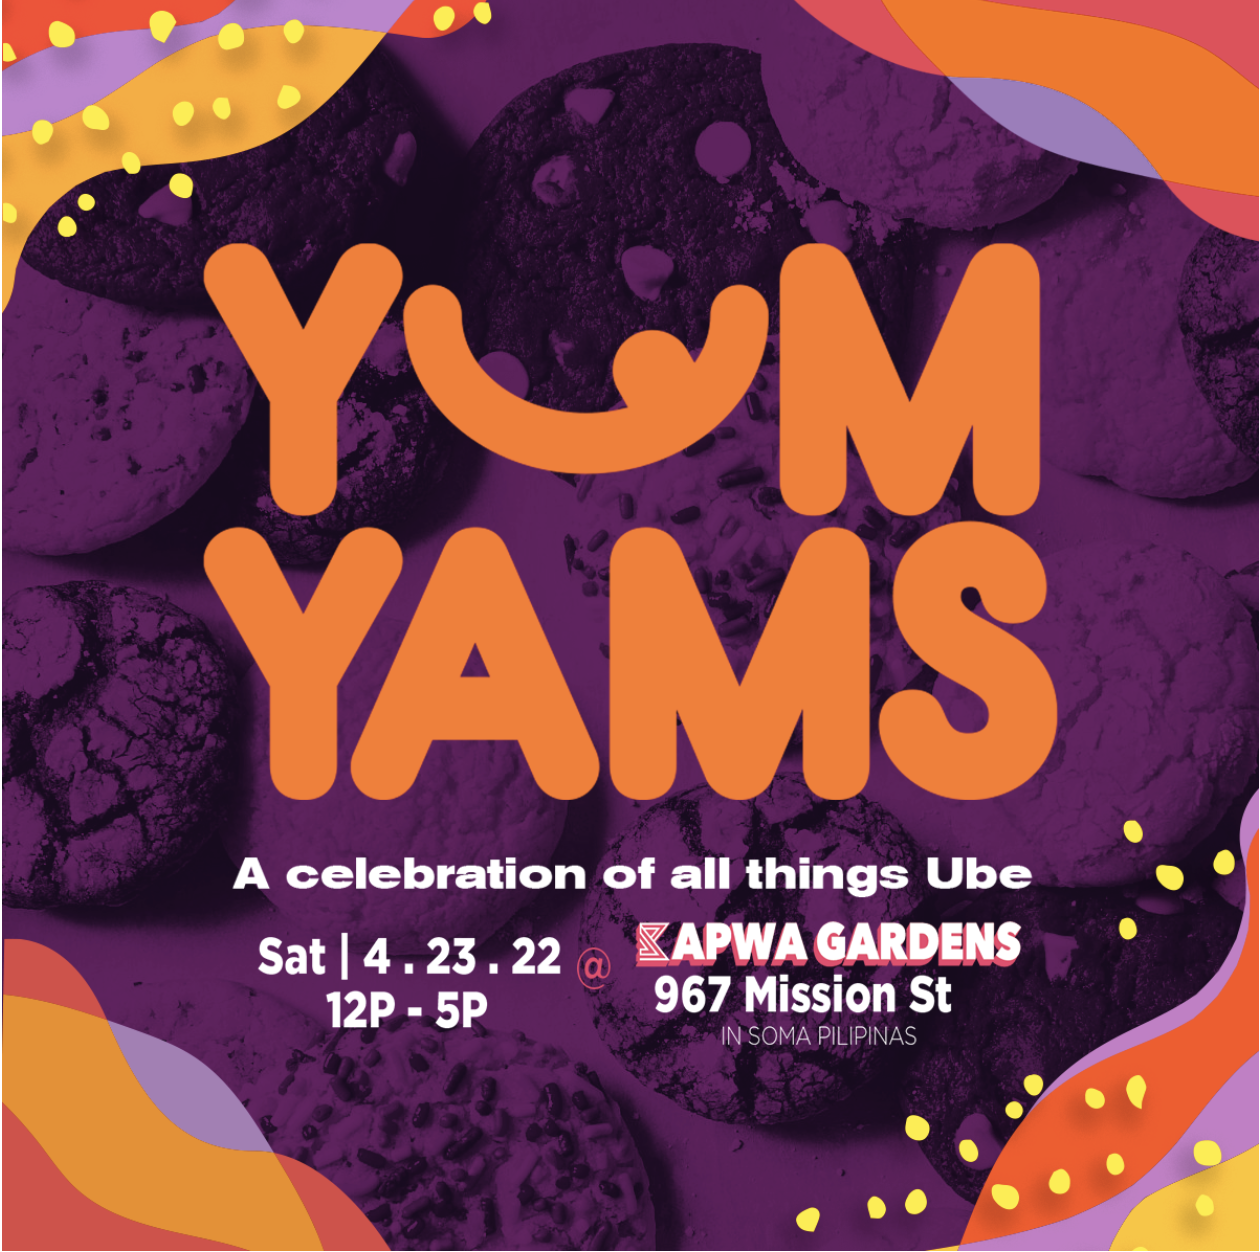 flyer graphic: yum yams